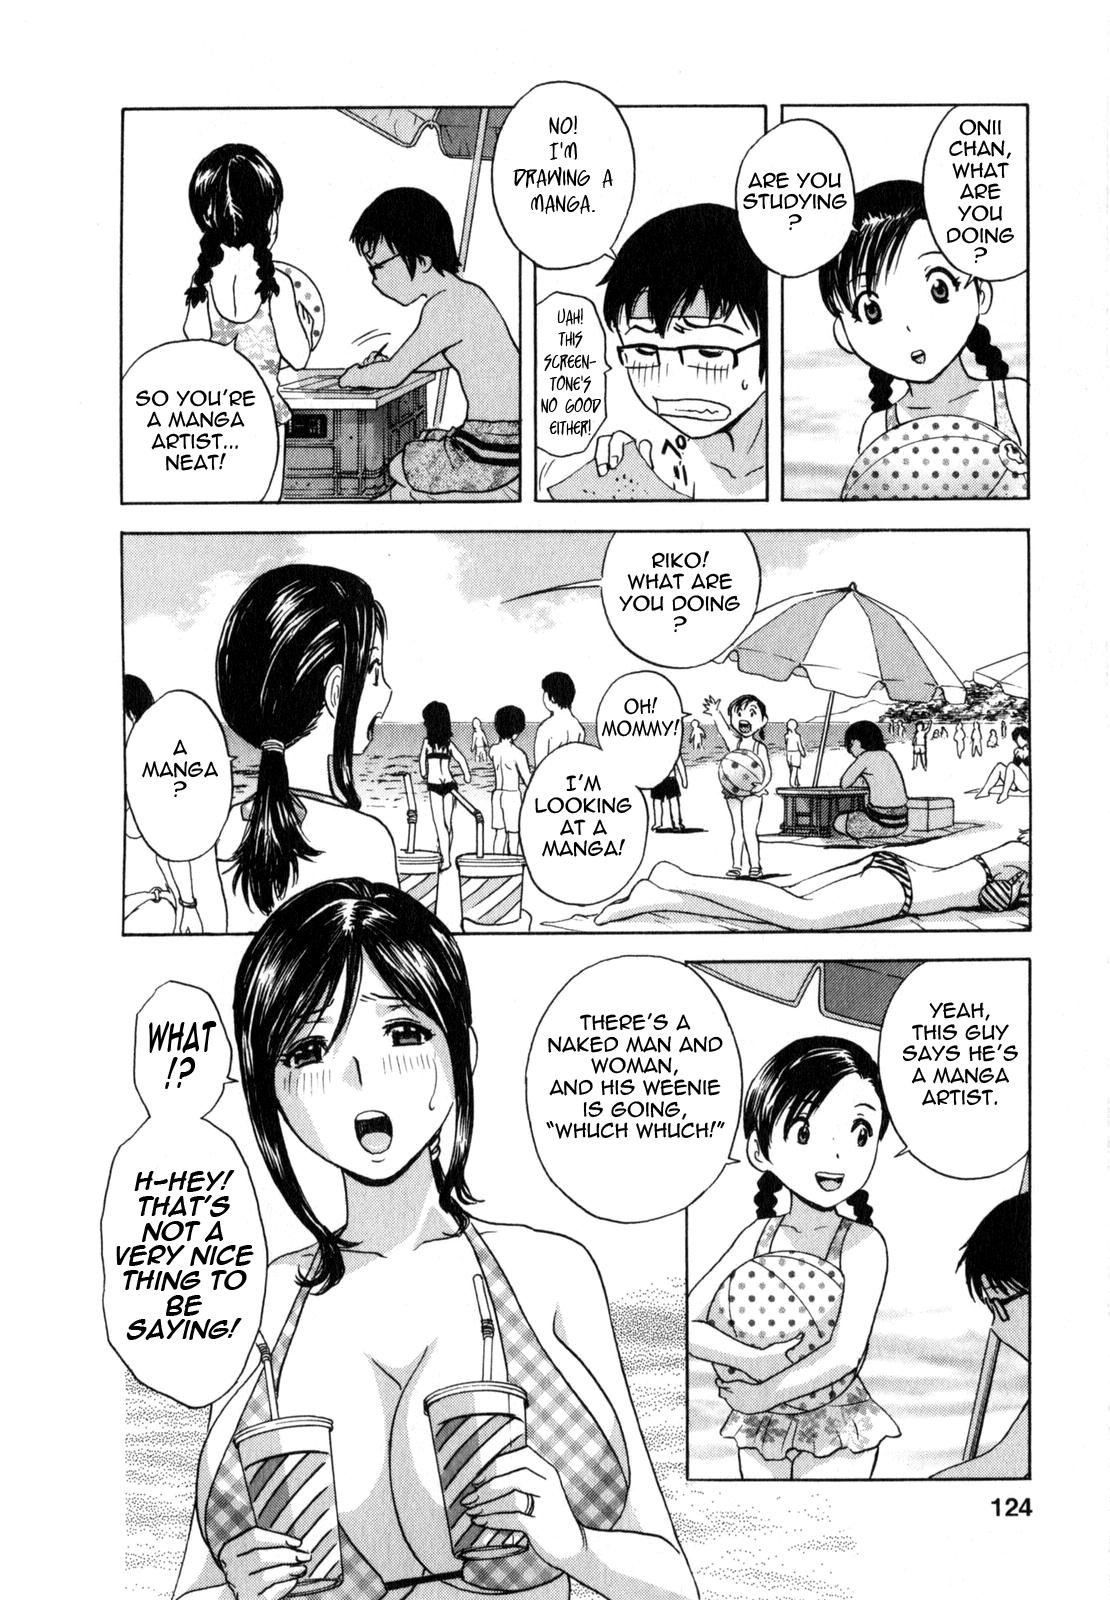 [Hidemaru] Life with Married Women Just Like a Manga 2 - Ch. 1-8 [English] {Tadanohito} 129